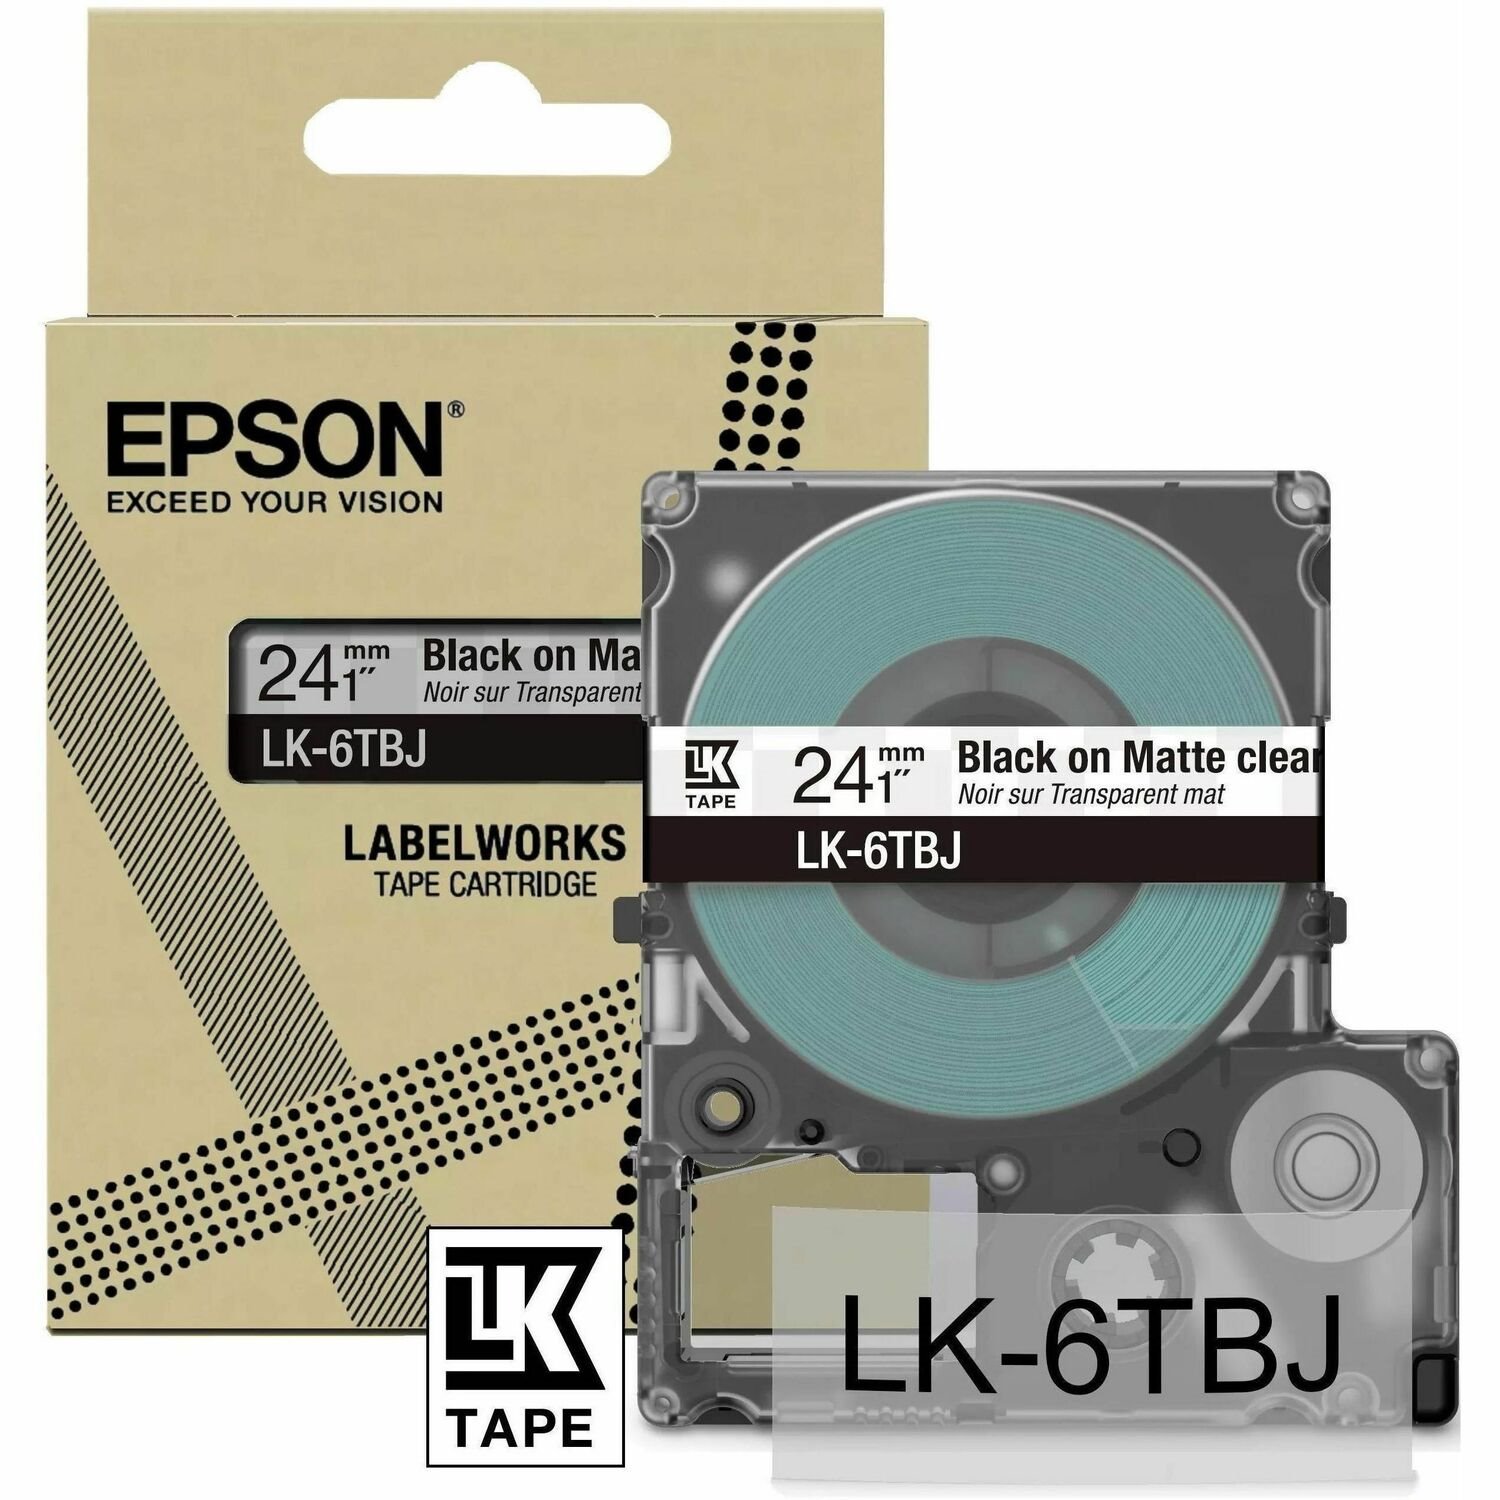 Epson LK-6TBJ Label Tape